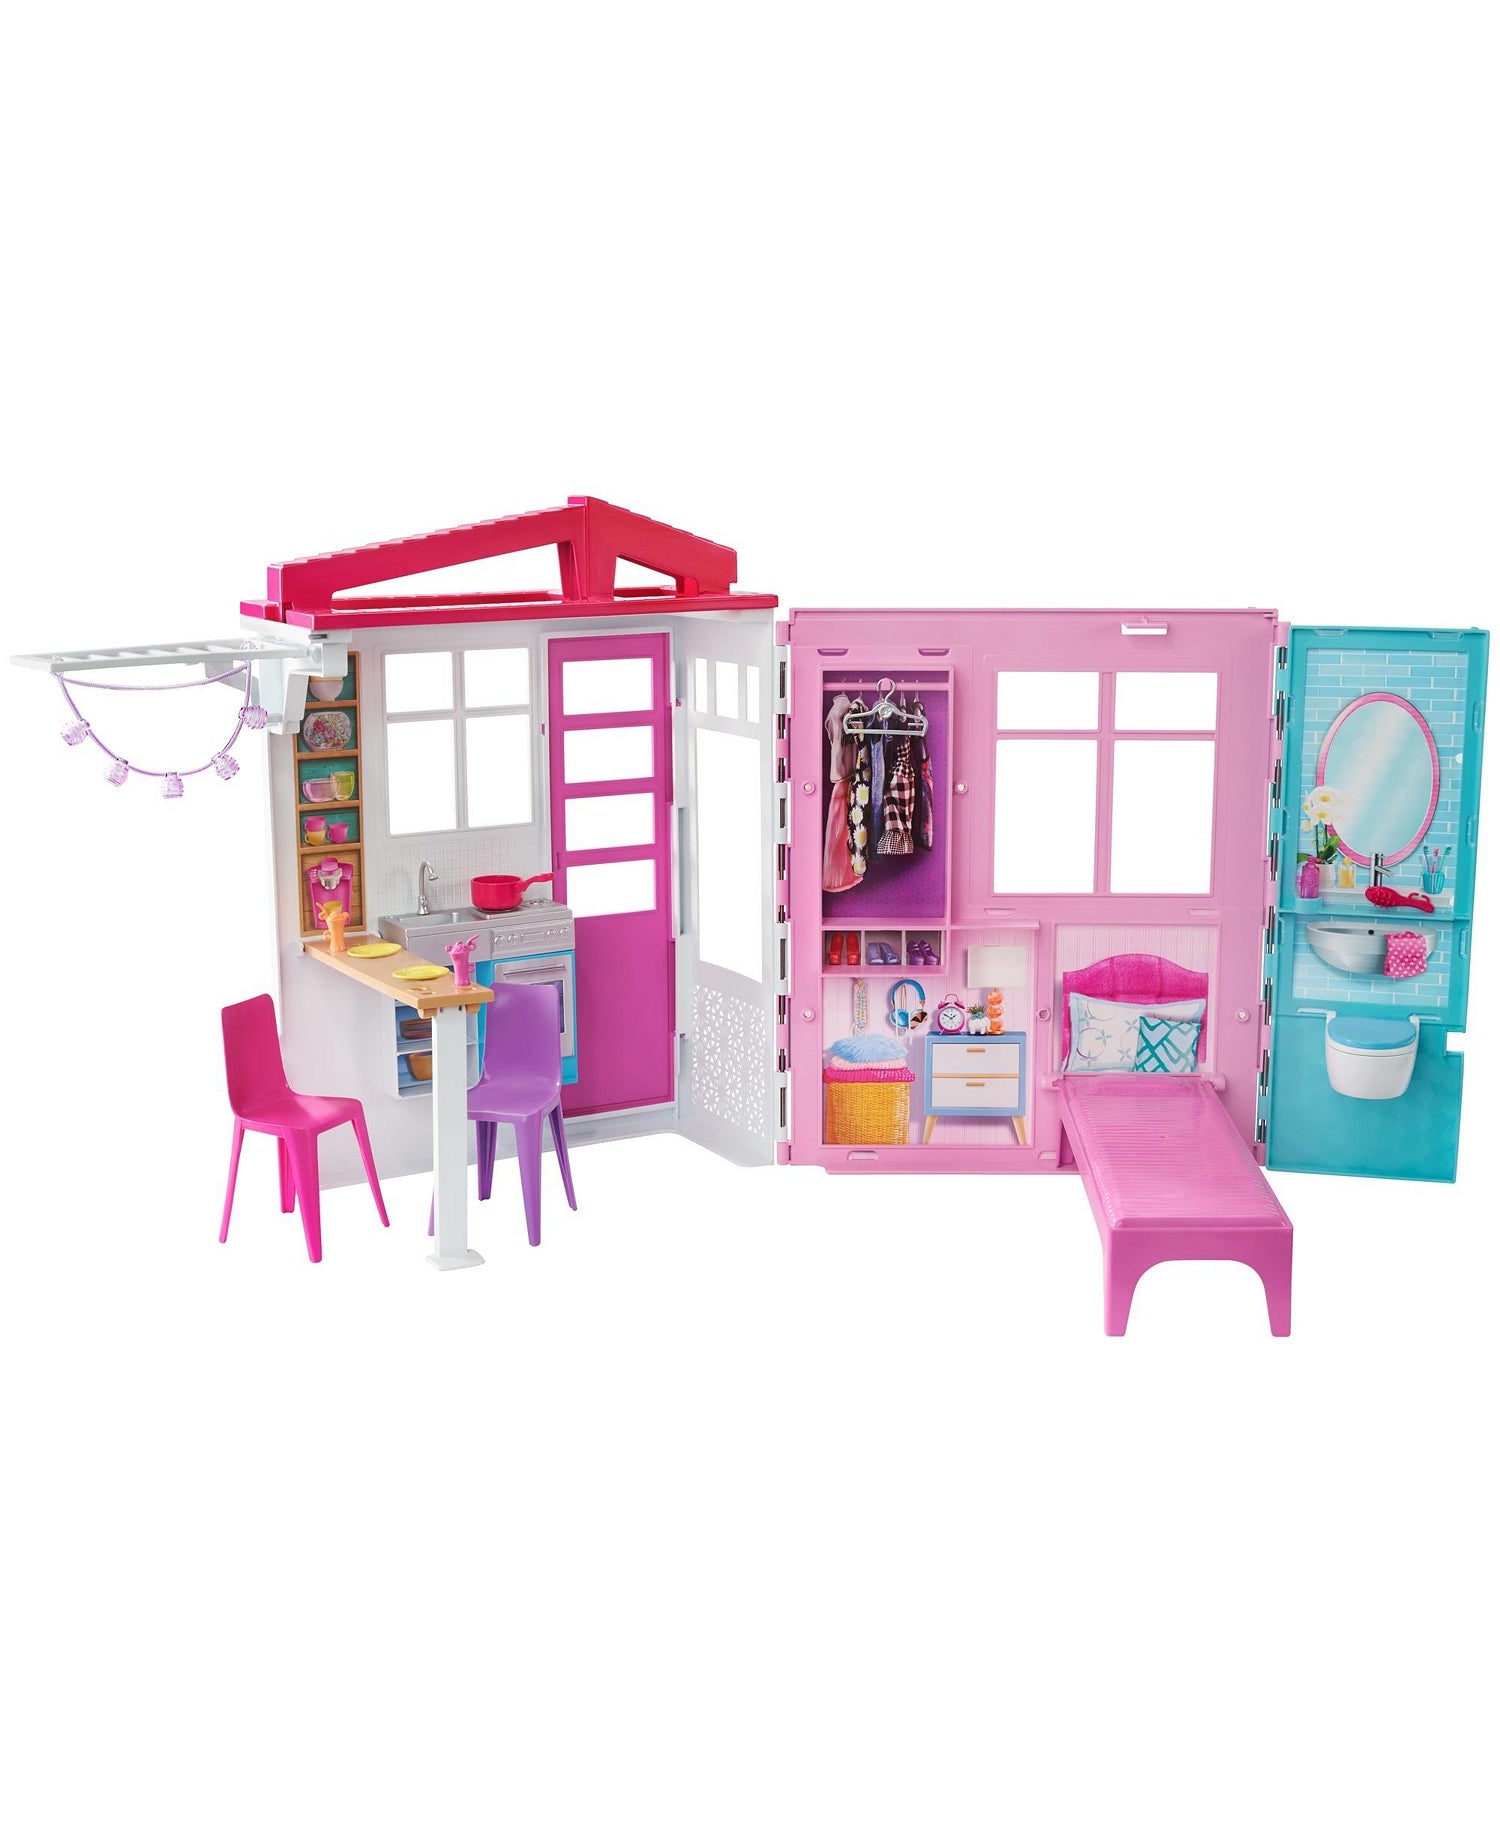 Barbie Age 3 Plus Fully Furnished Dollhouse